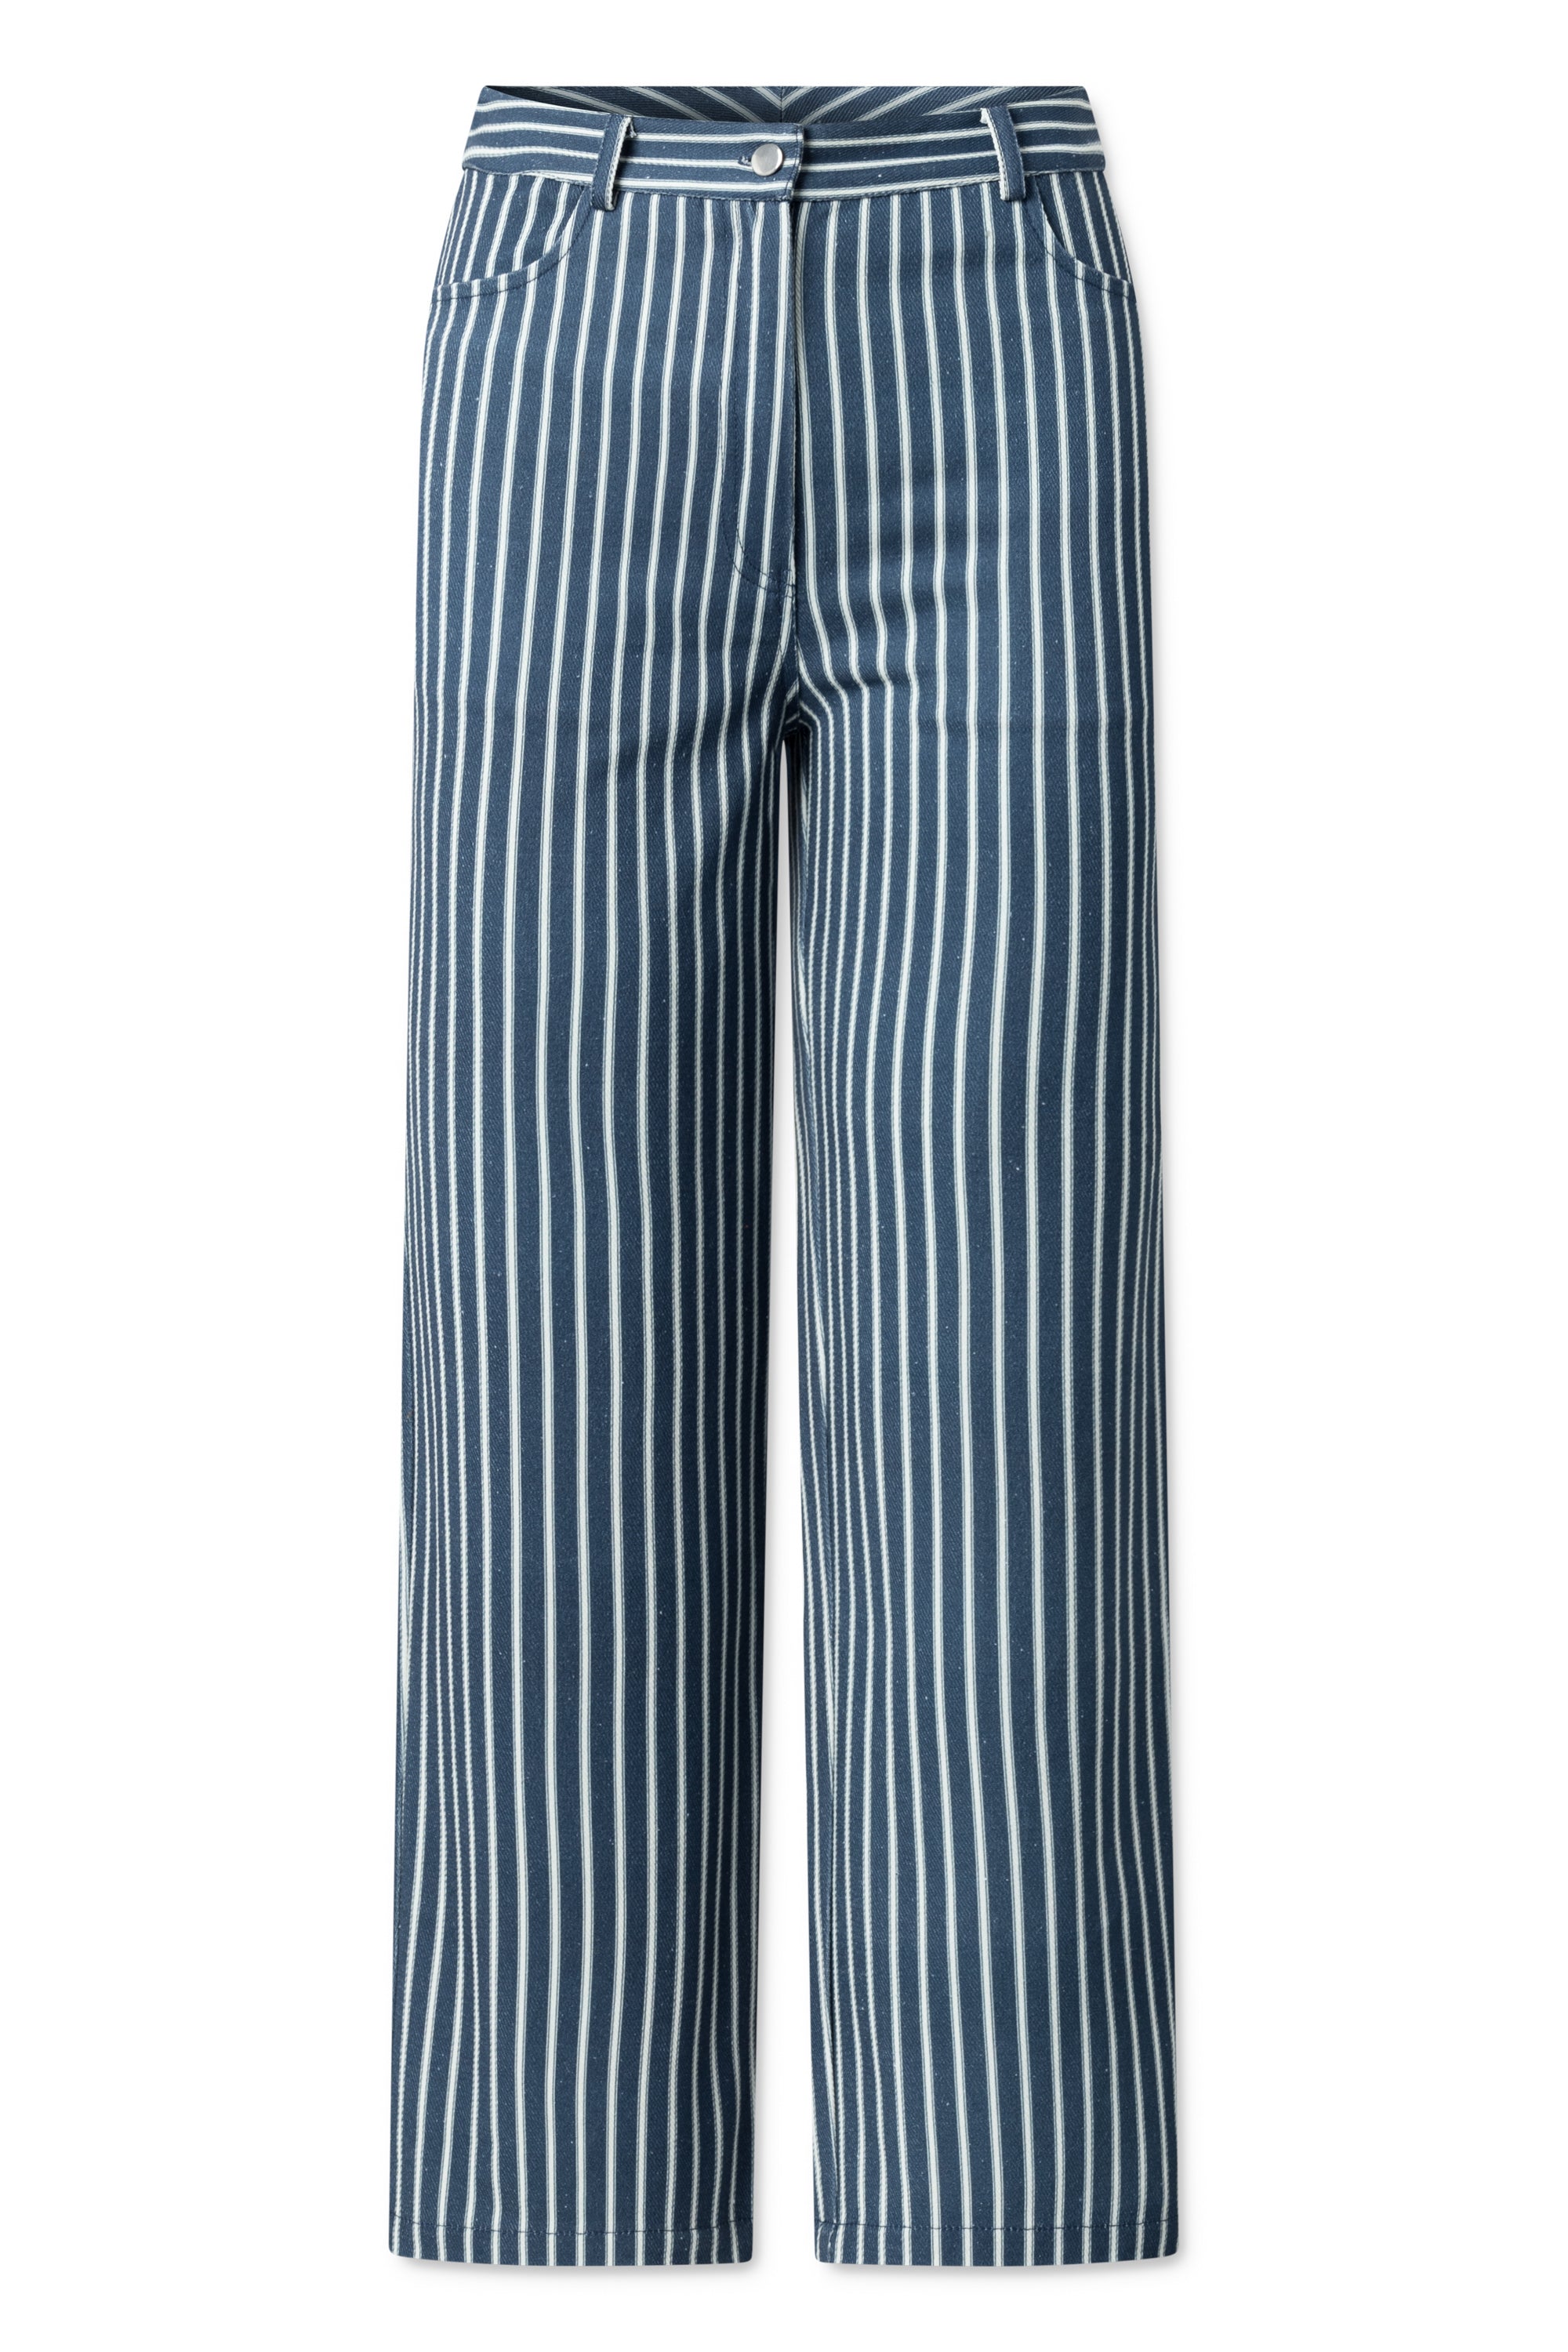 nué notes Logan Pants - Dark Blue Stripe PANTS 495 DARK BLUE STRIPE